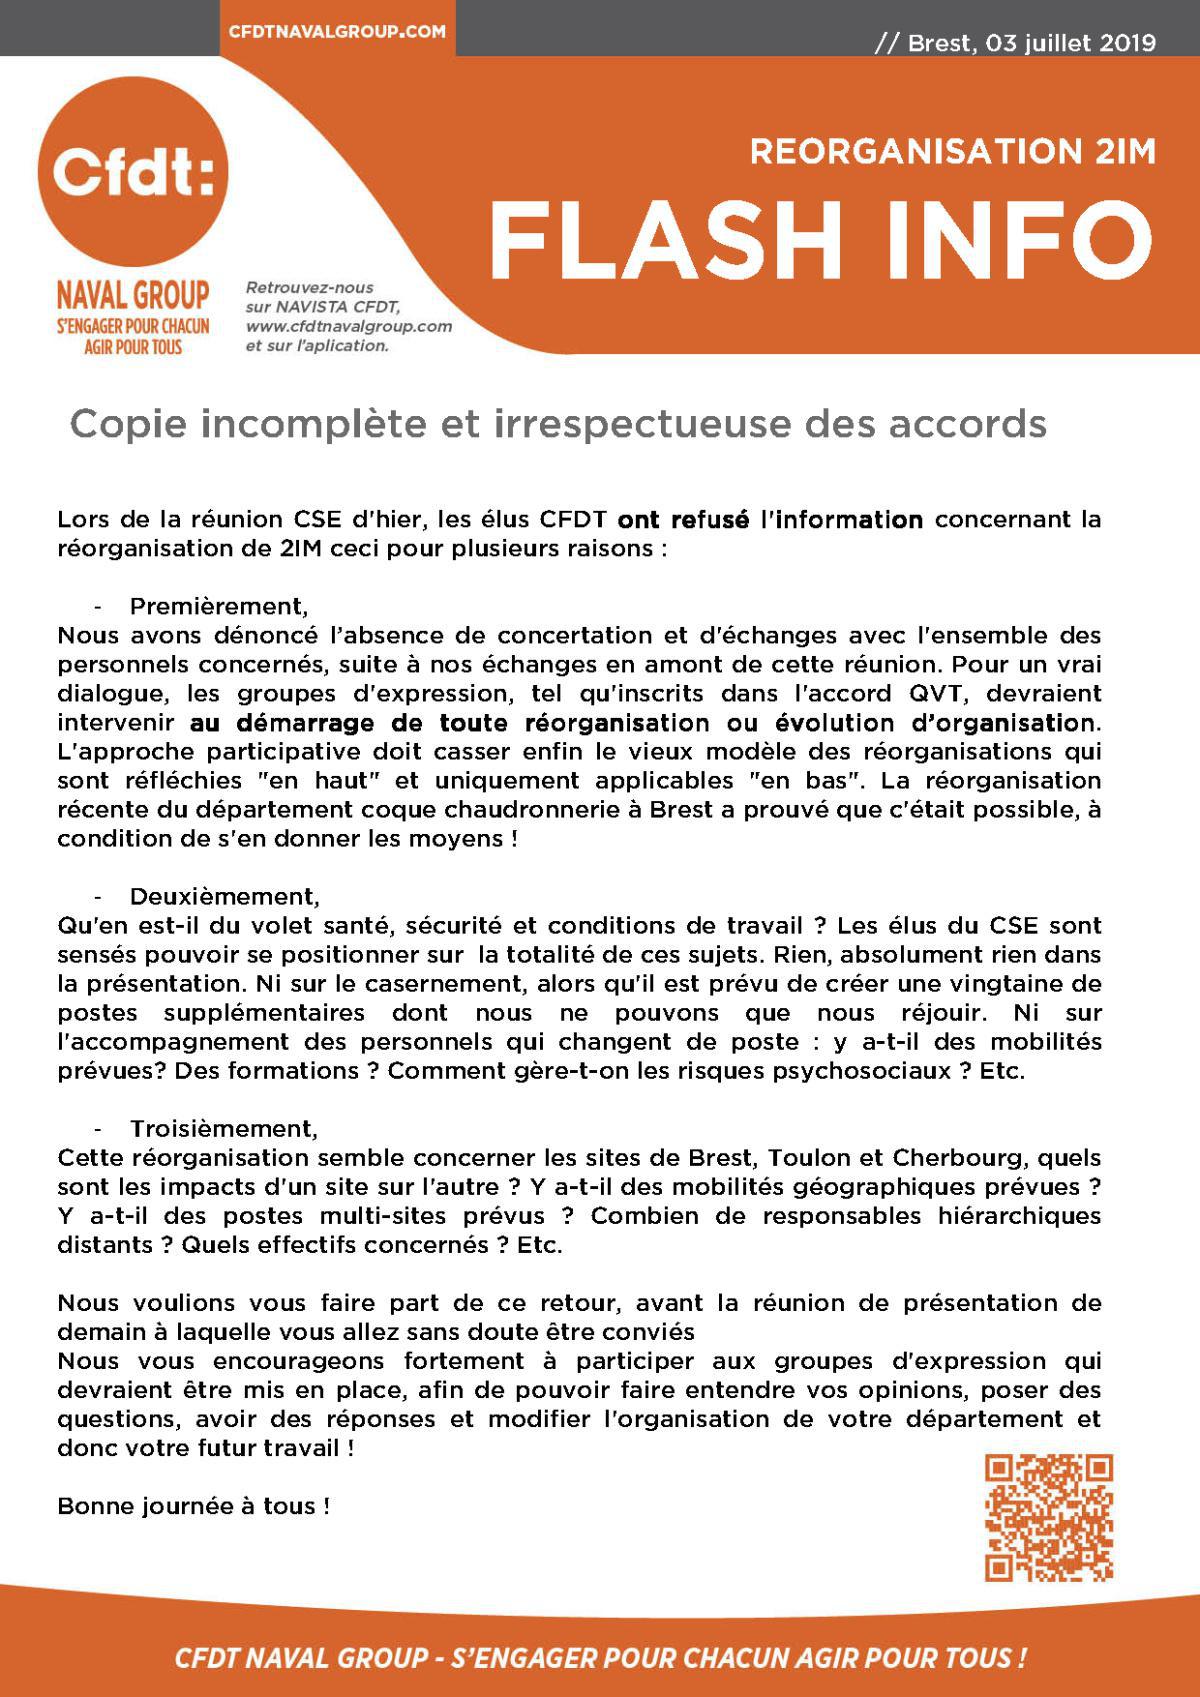 Flash Info : Réorganisation 2IM